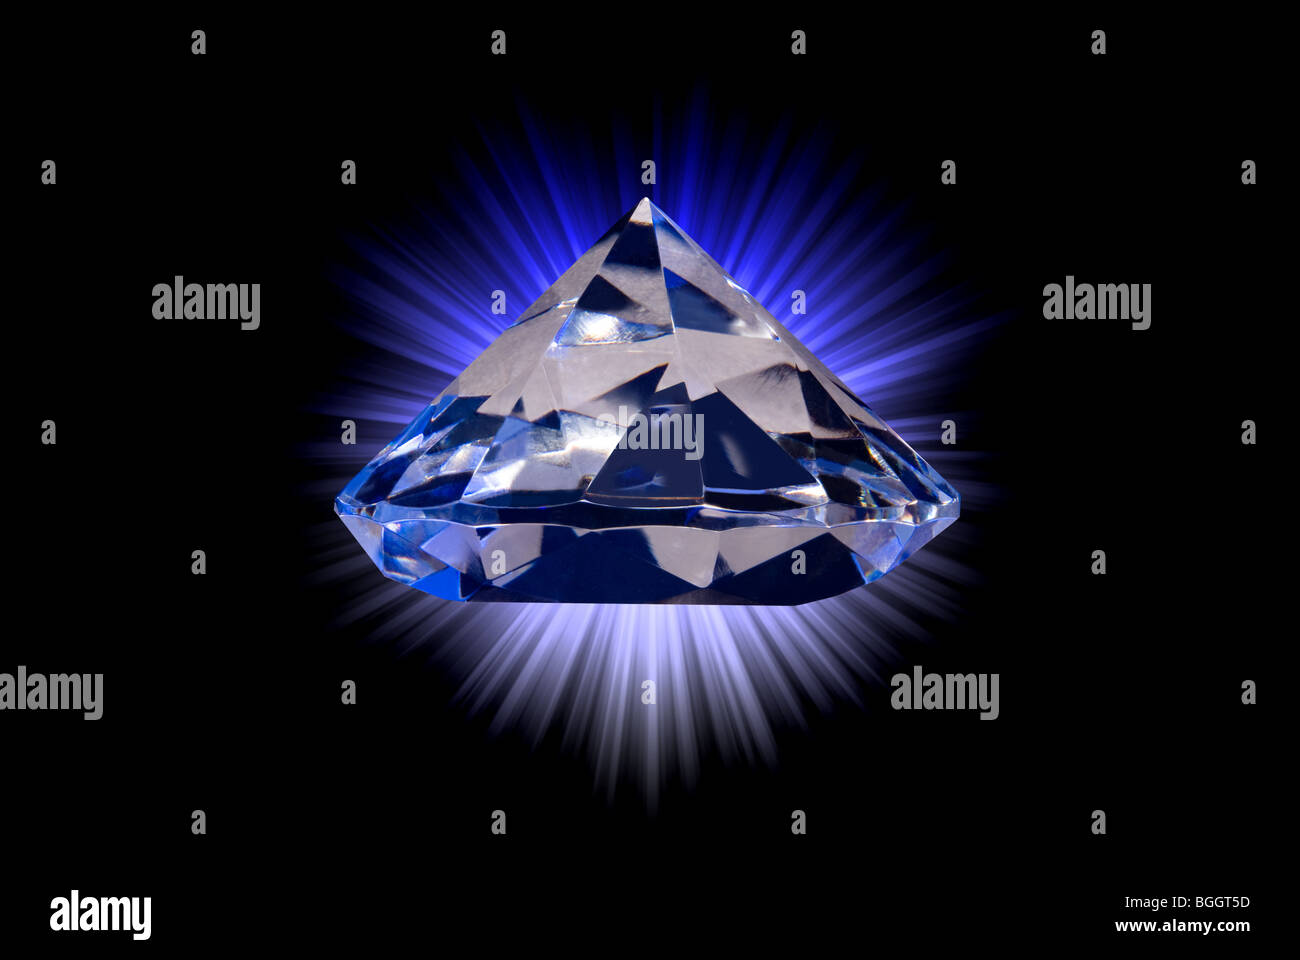 A diamond gem against a star burst gradient background. Stock Photo